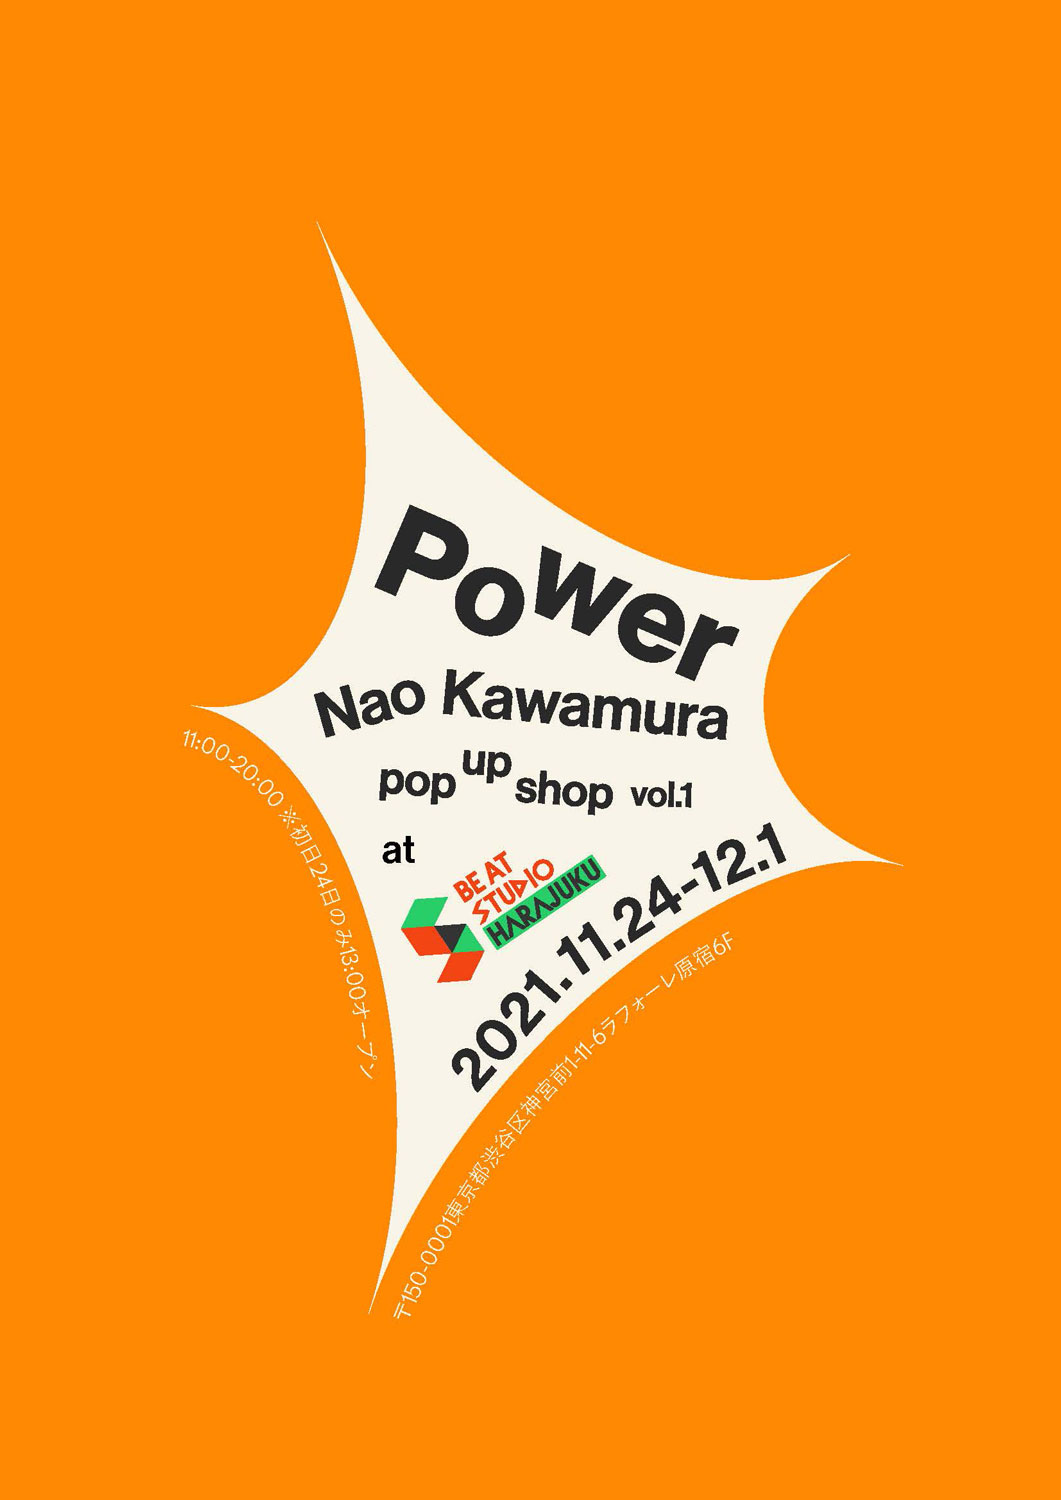 「Nao Kawamura pop up shop vol.1 "Power"」